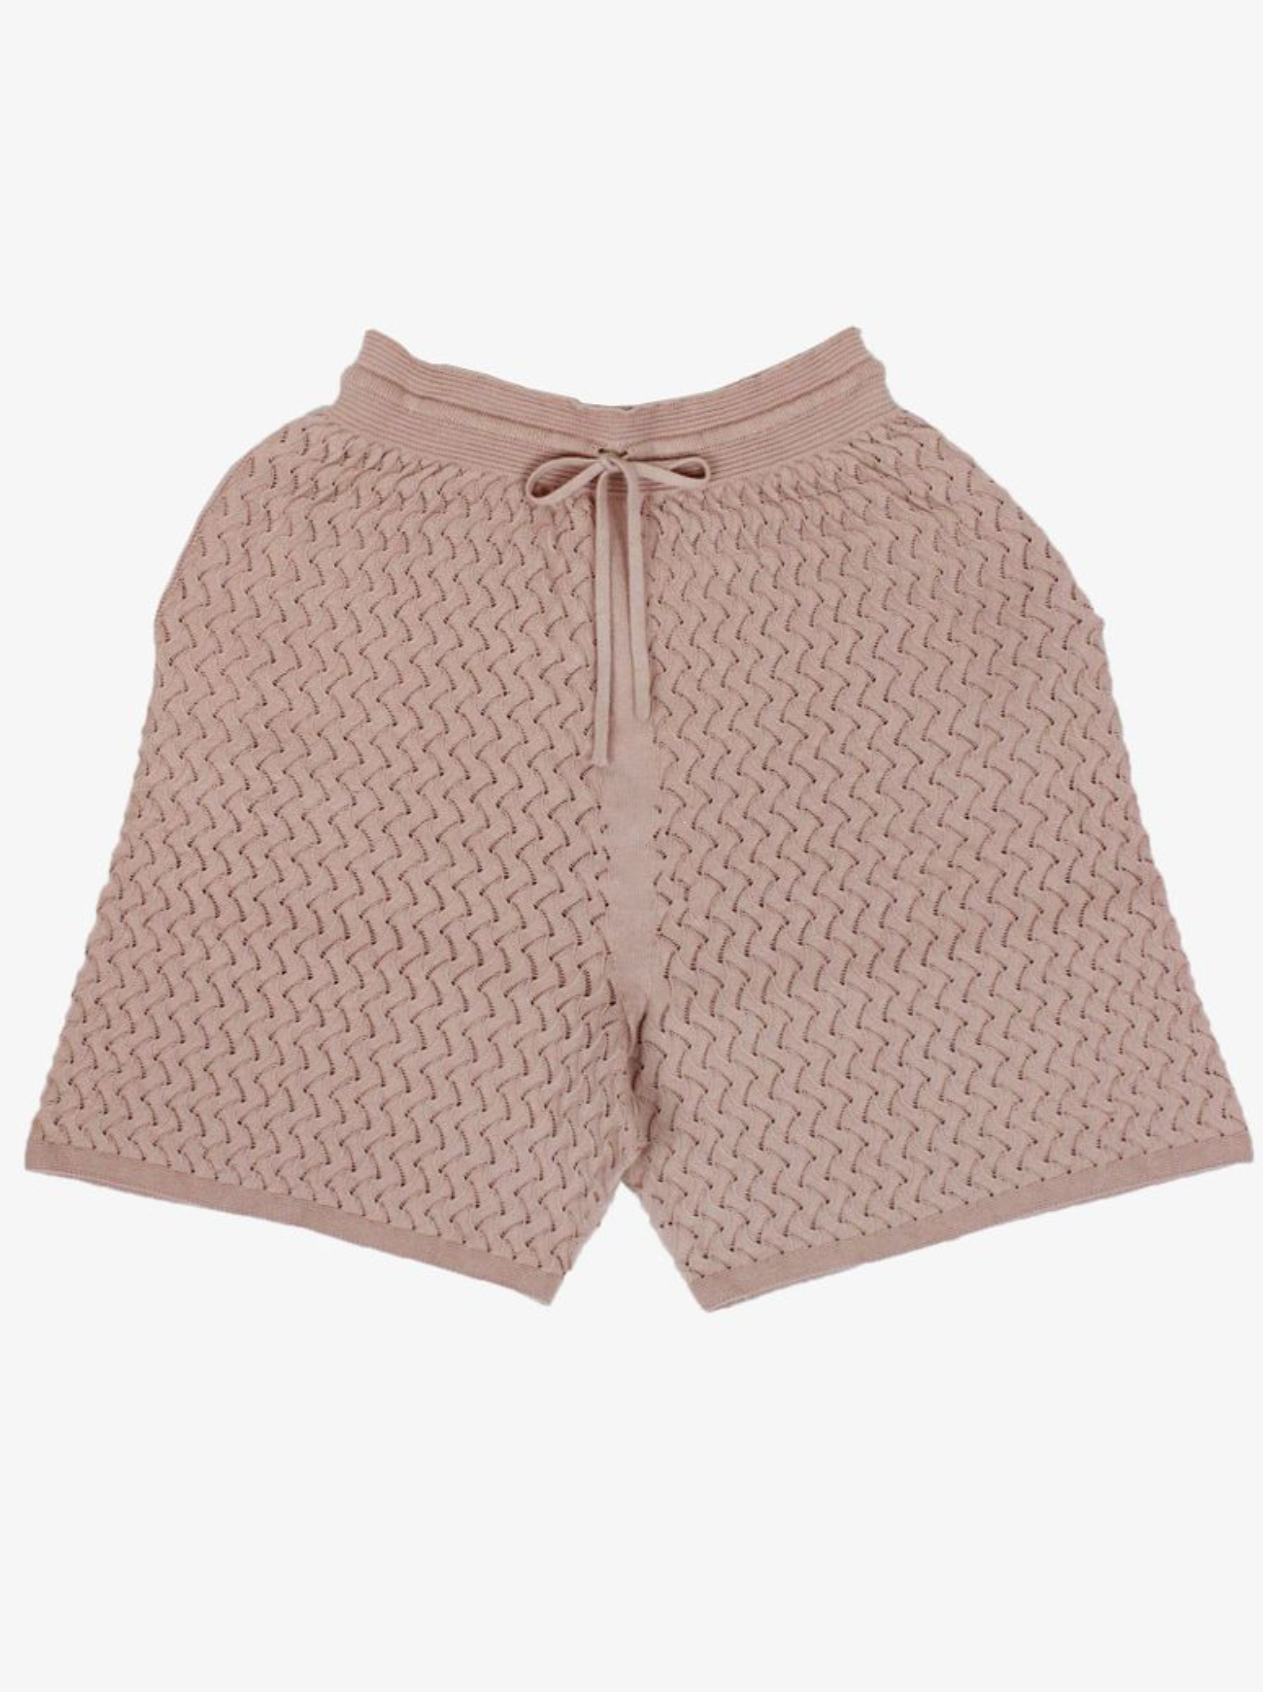 nina cotton pointelle shorts in shell